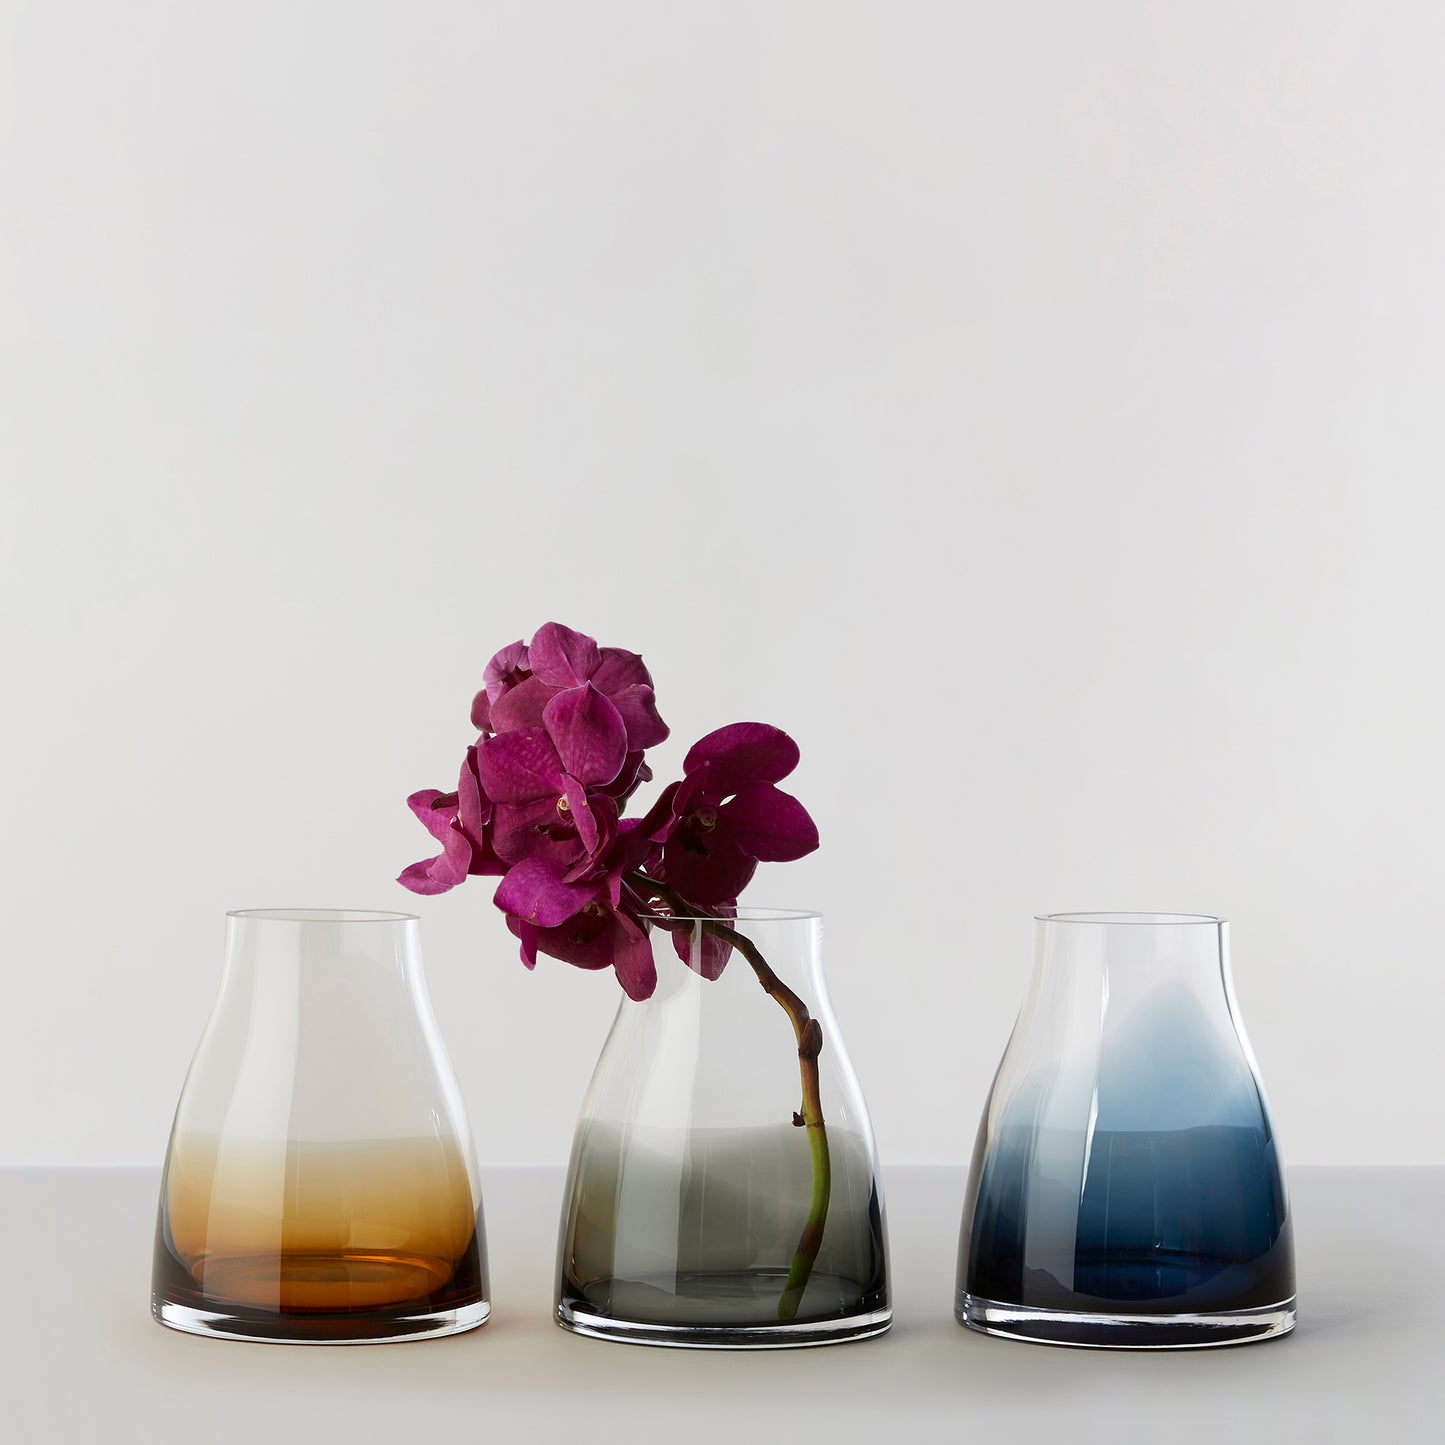 Flower Vase no. 2 - Indigo blue